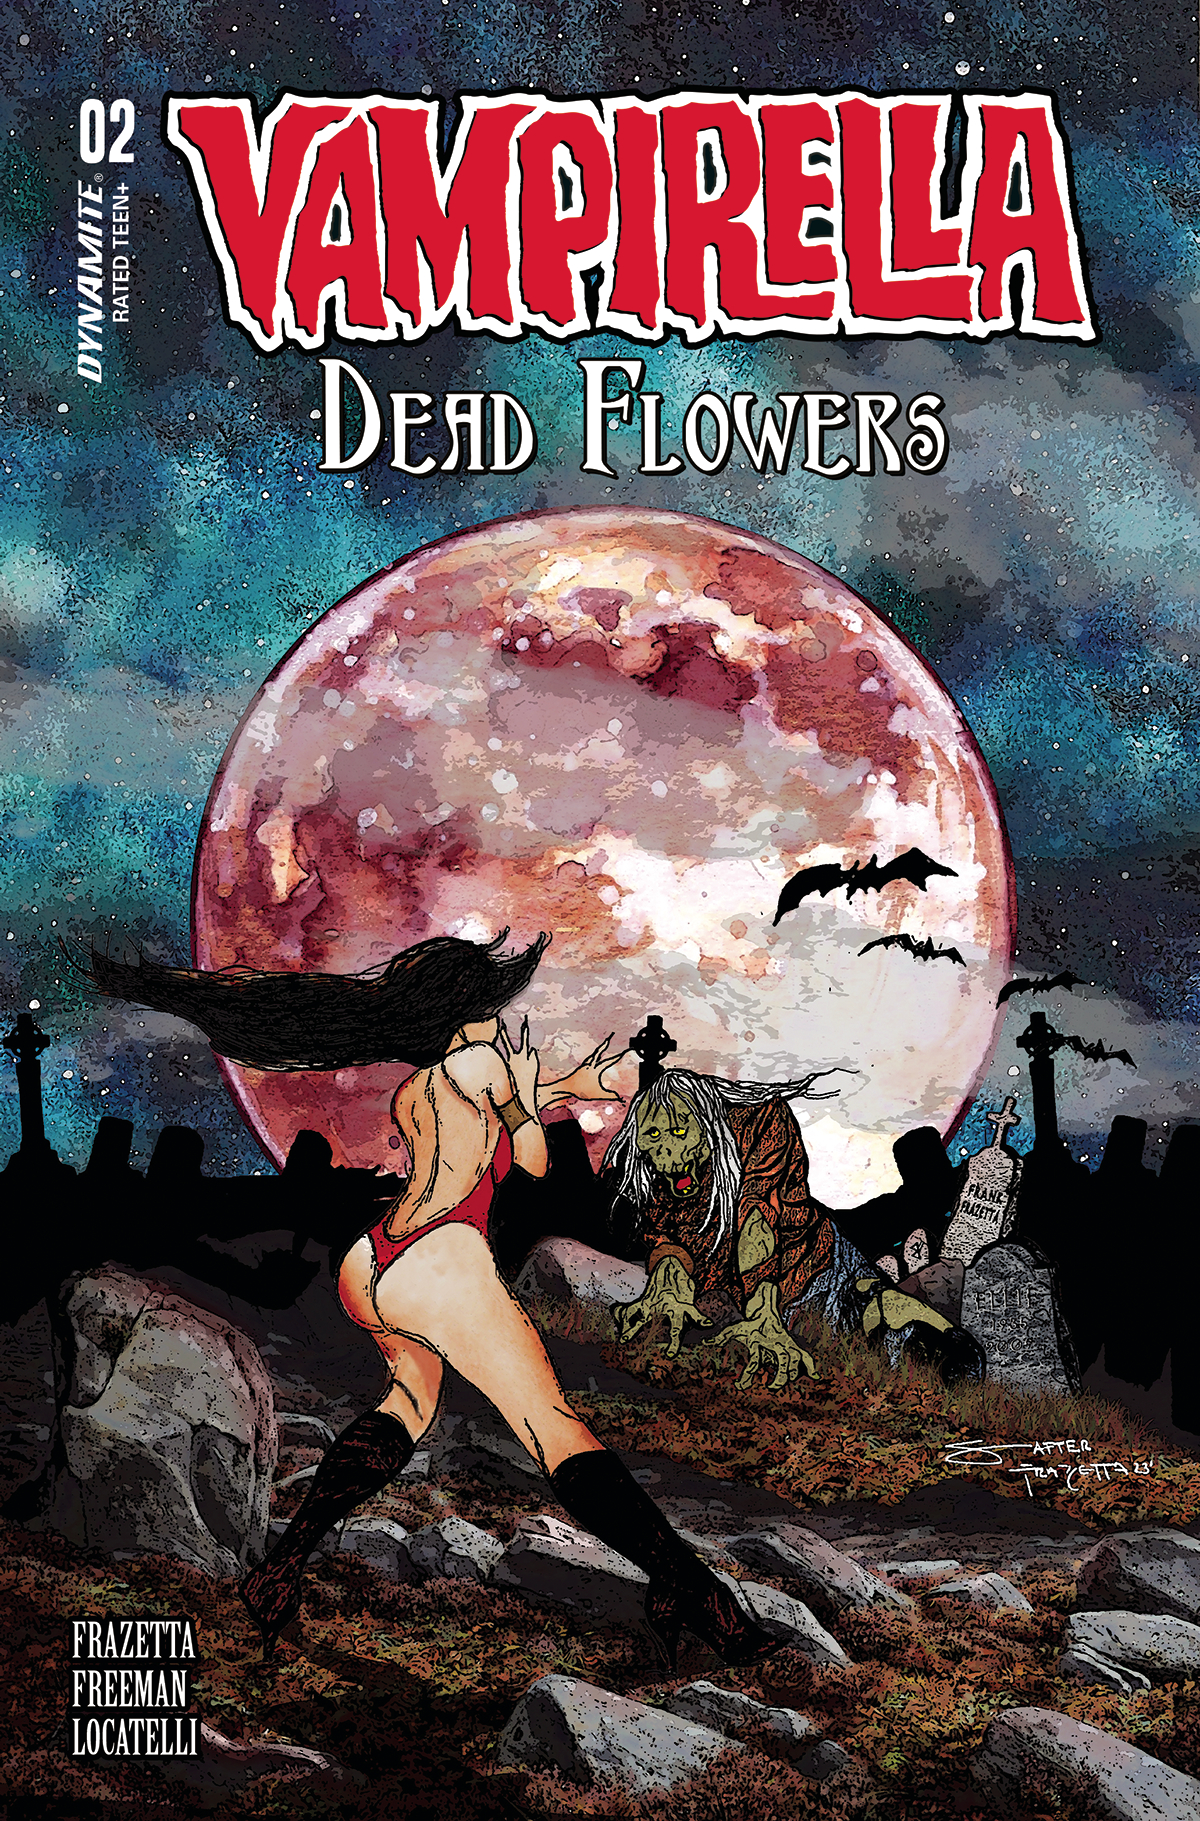 Vampirella Dead Flowers #2 Cover D Frazetta & Freeman (Of 4)